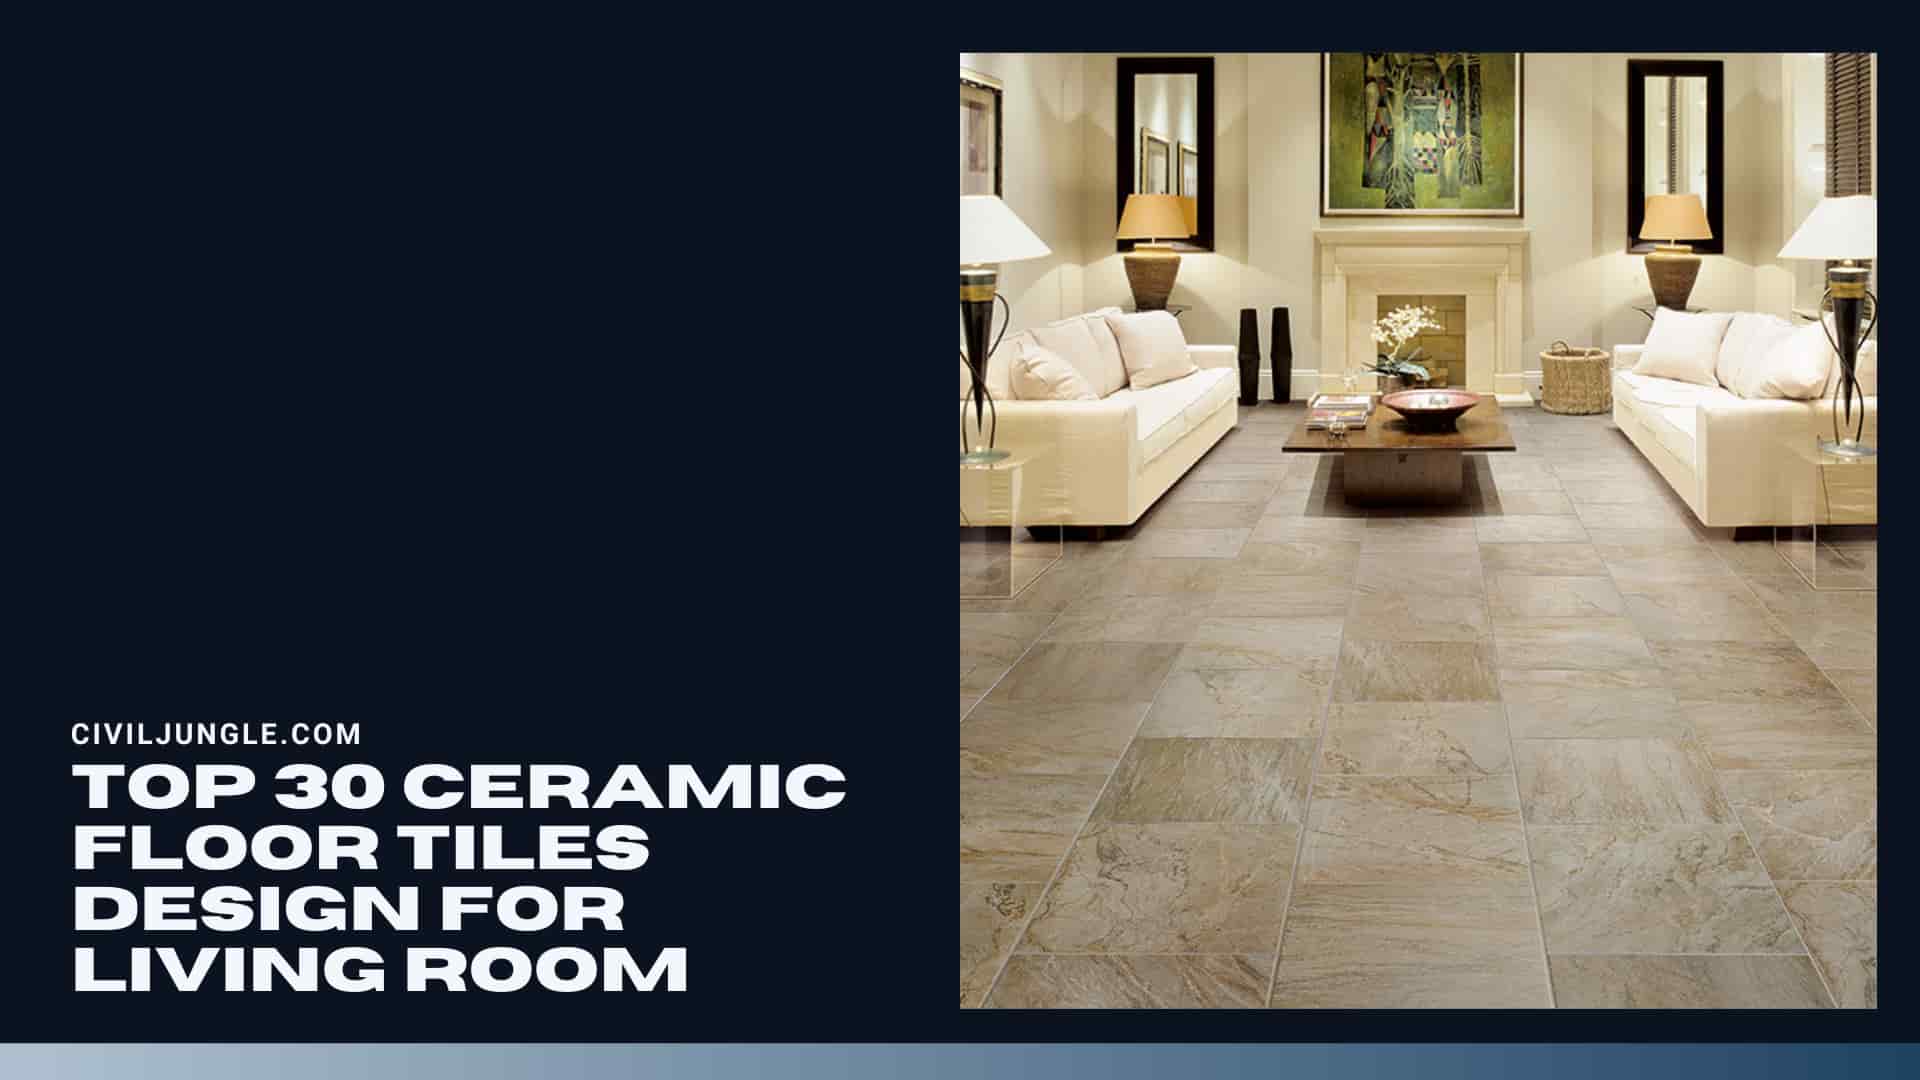 Top 30 Ceramic Floor Tiles Design for Living Room